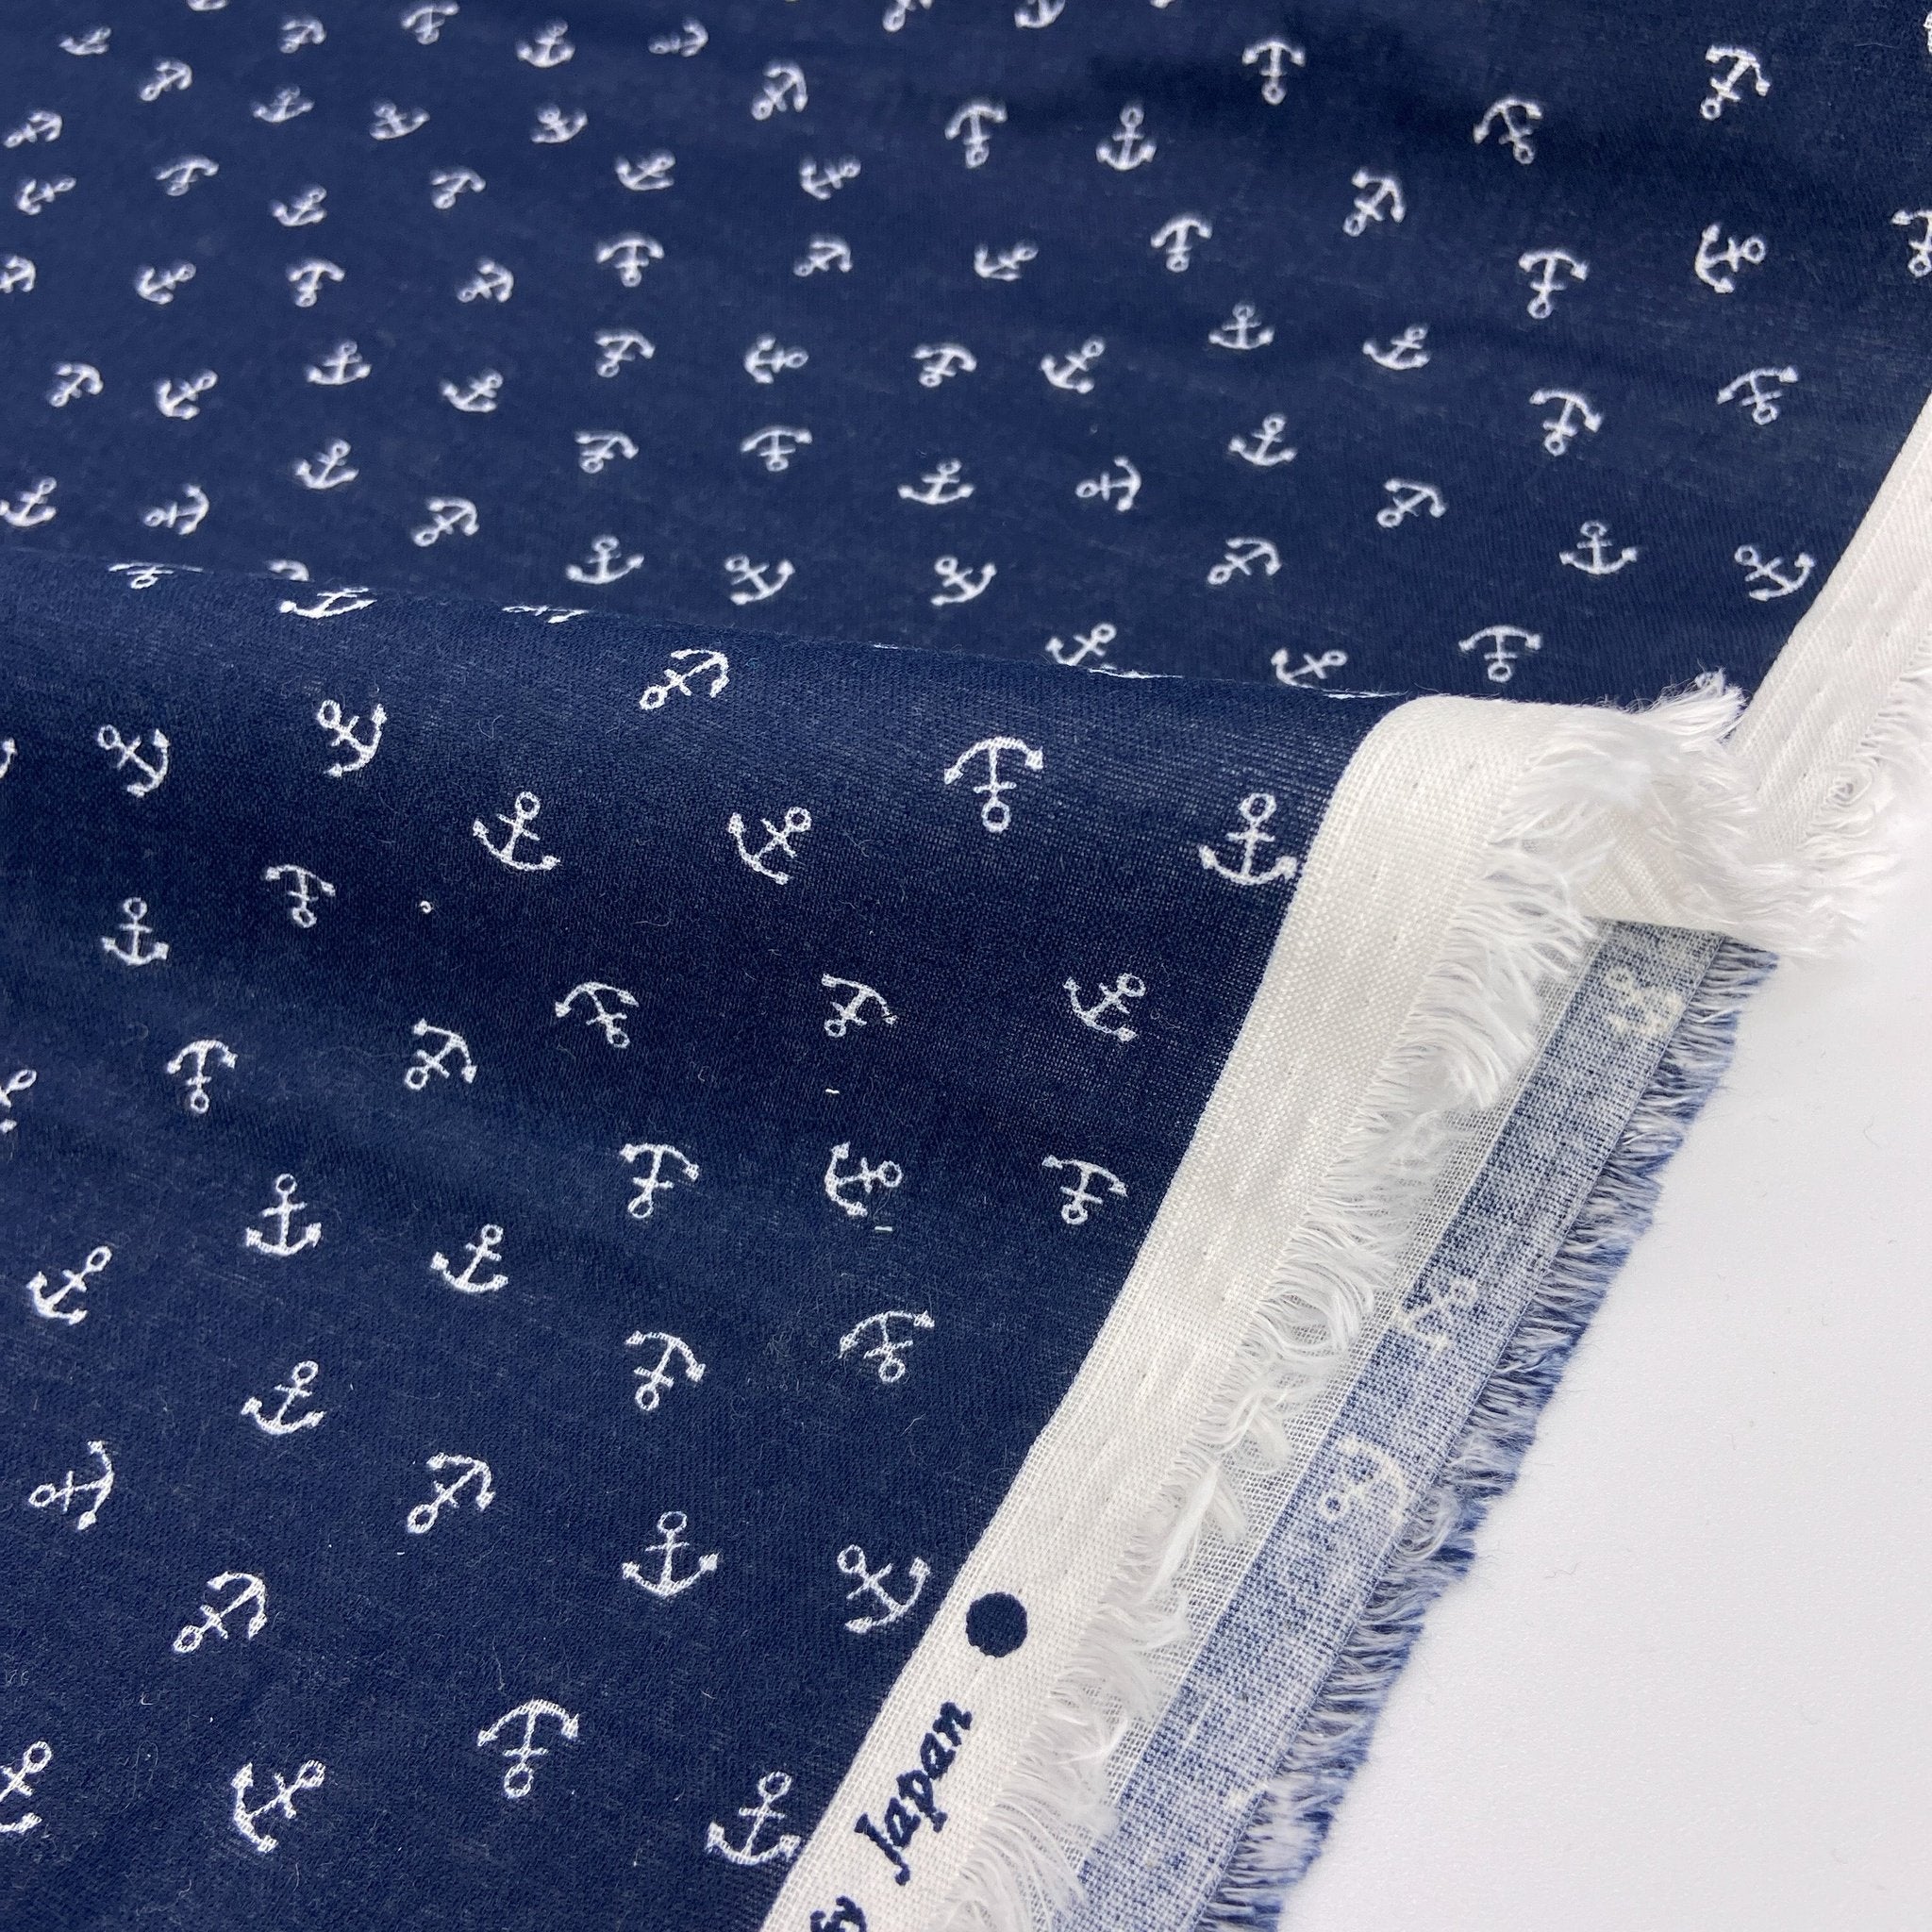 Japanese Cotton Double Gauze Print - Navy Bk White Anchor